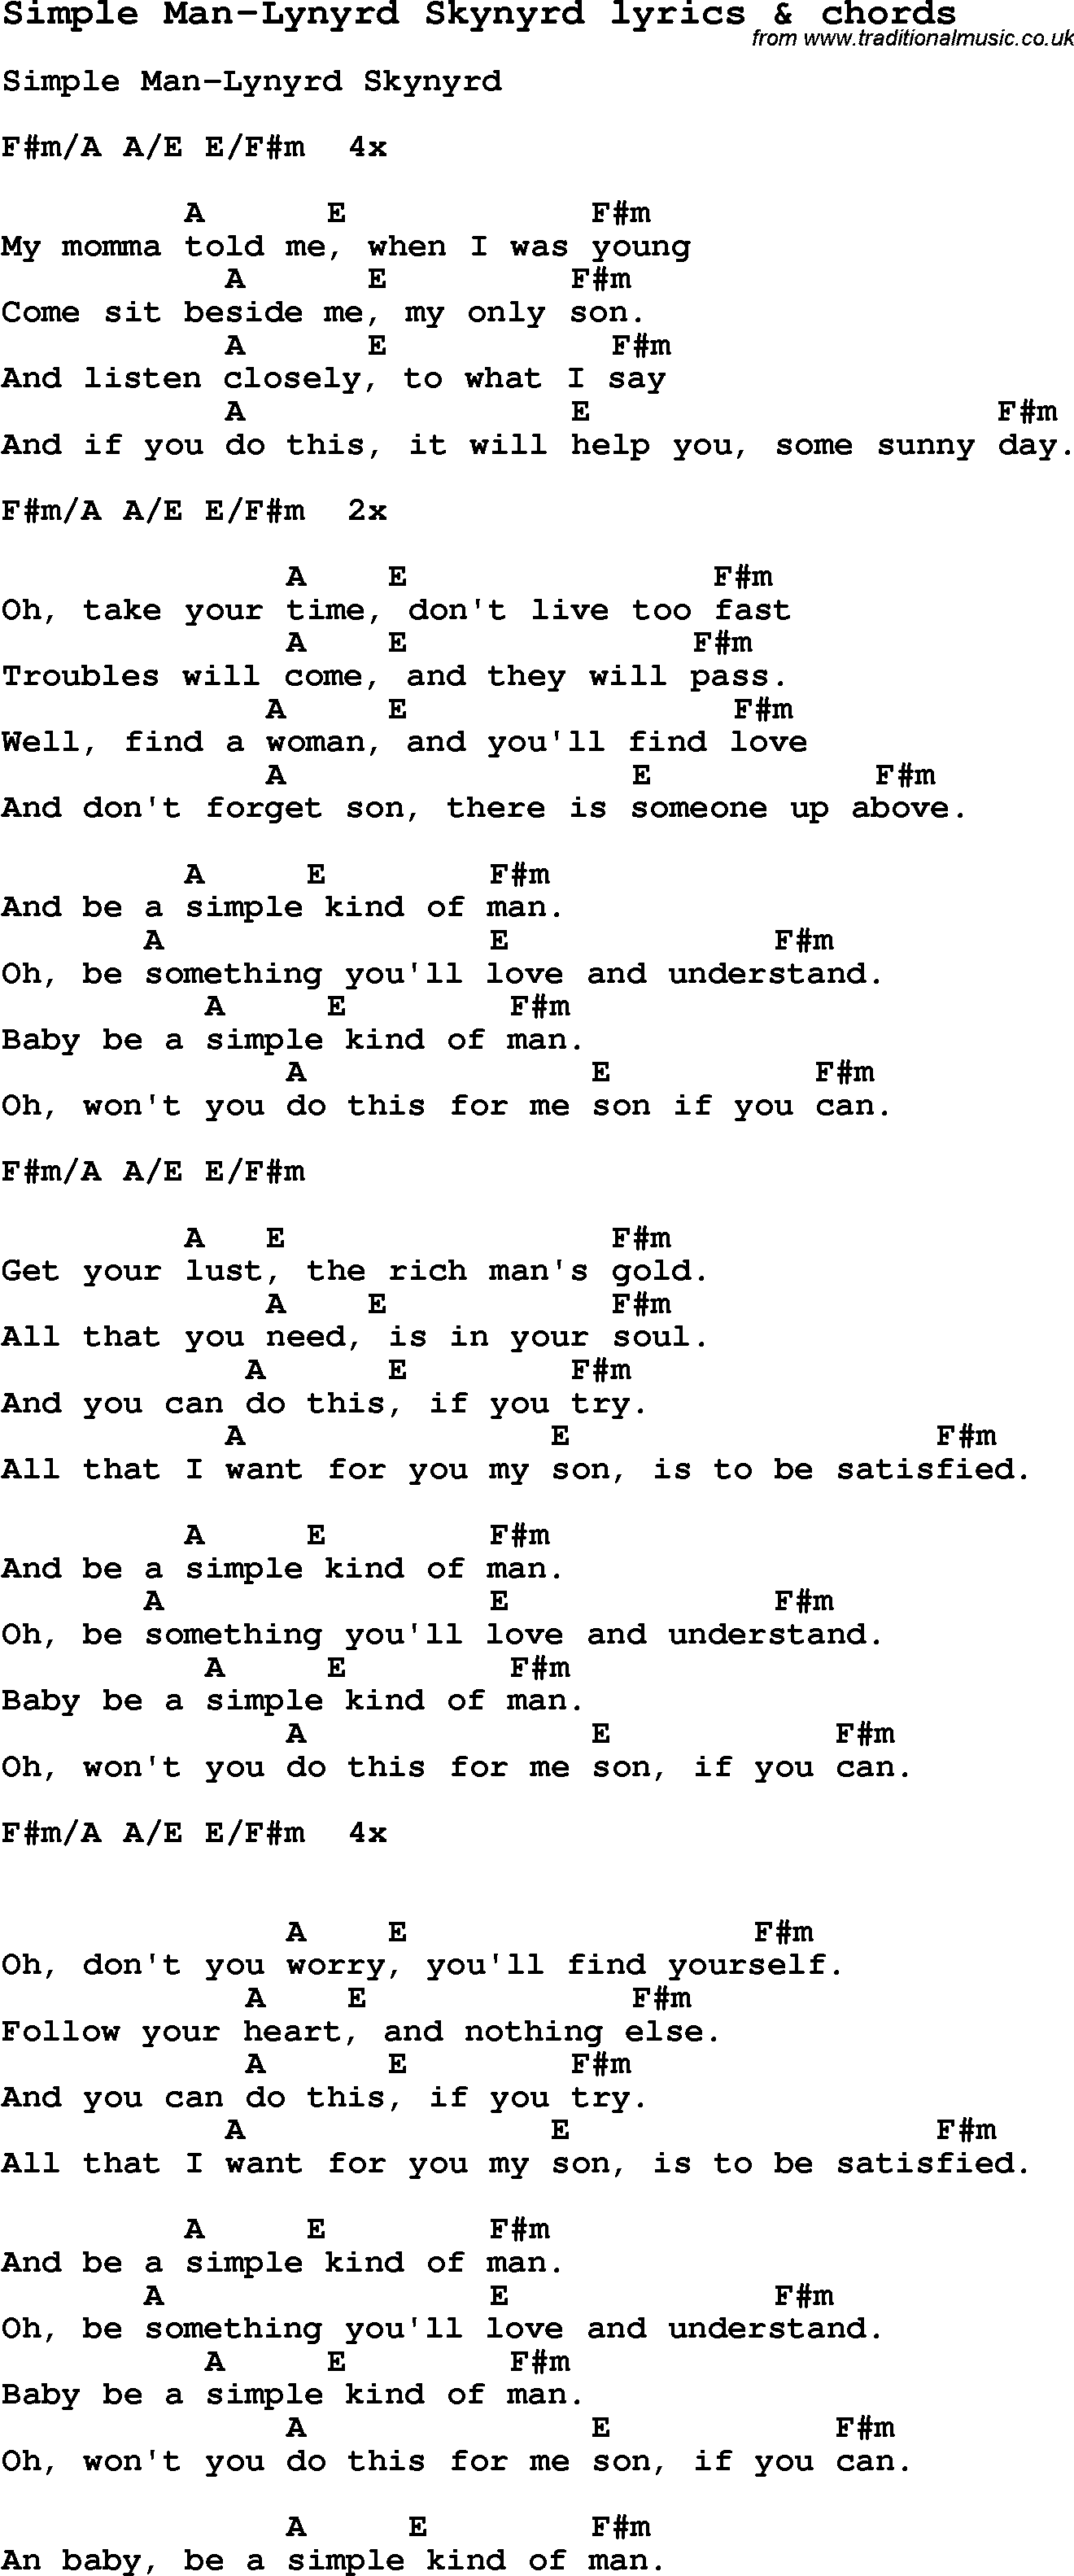 Love Song Lyrics for: Simple Man-Lynyrd Skynyrd with chords for Ukulele, Guitar Banjo etc.